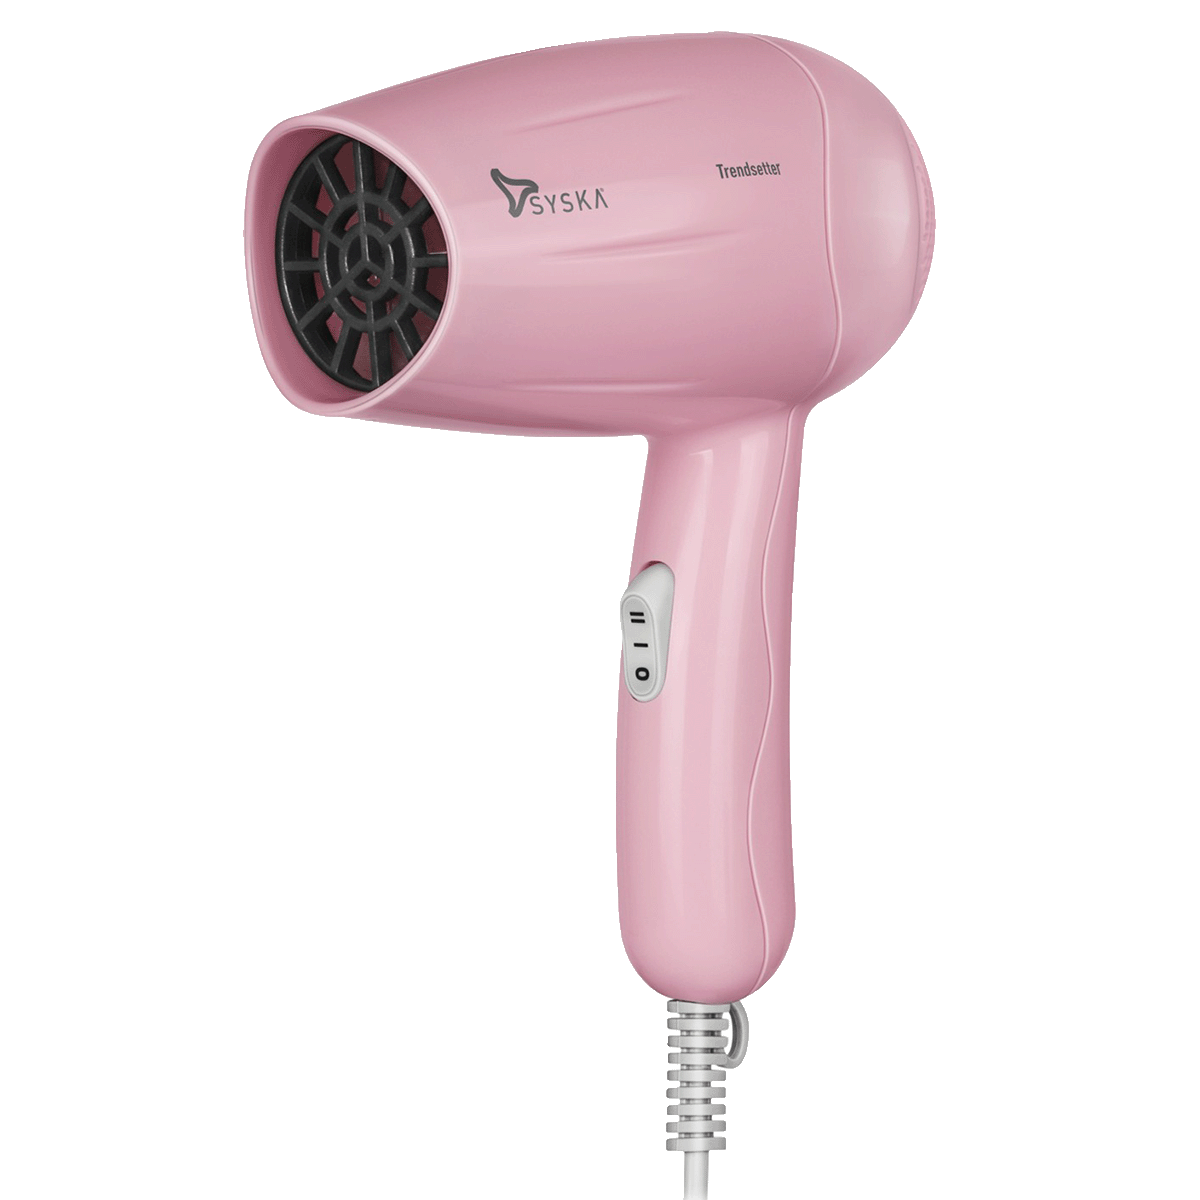 Syska Trendsetter 2 Setting Hair Dryer (Overheat Protection, HD1010, Pink)_1